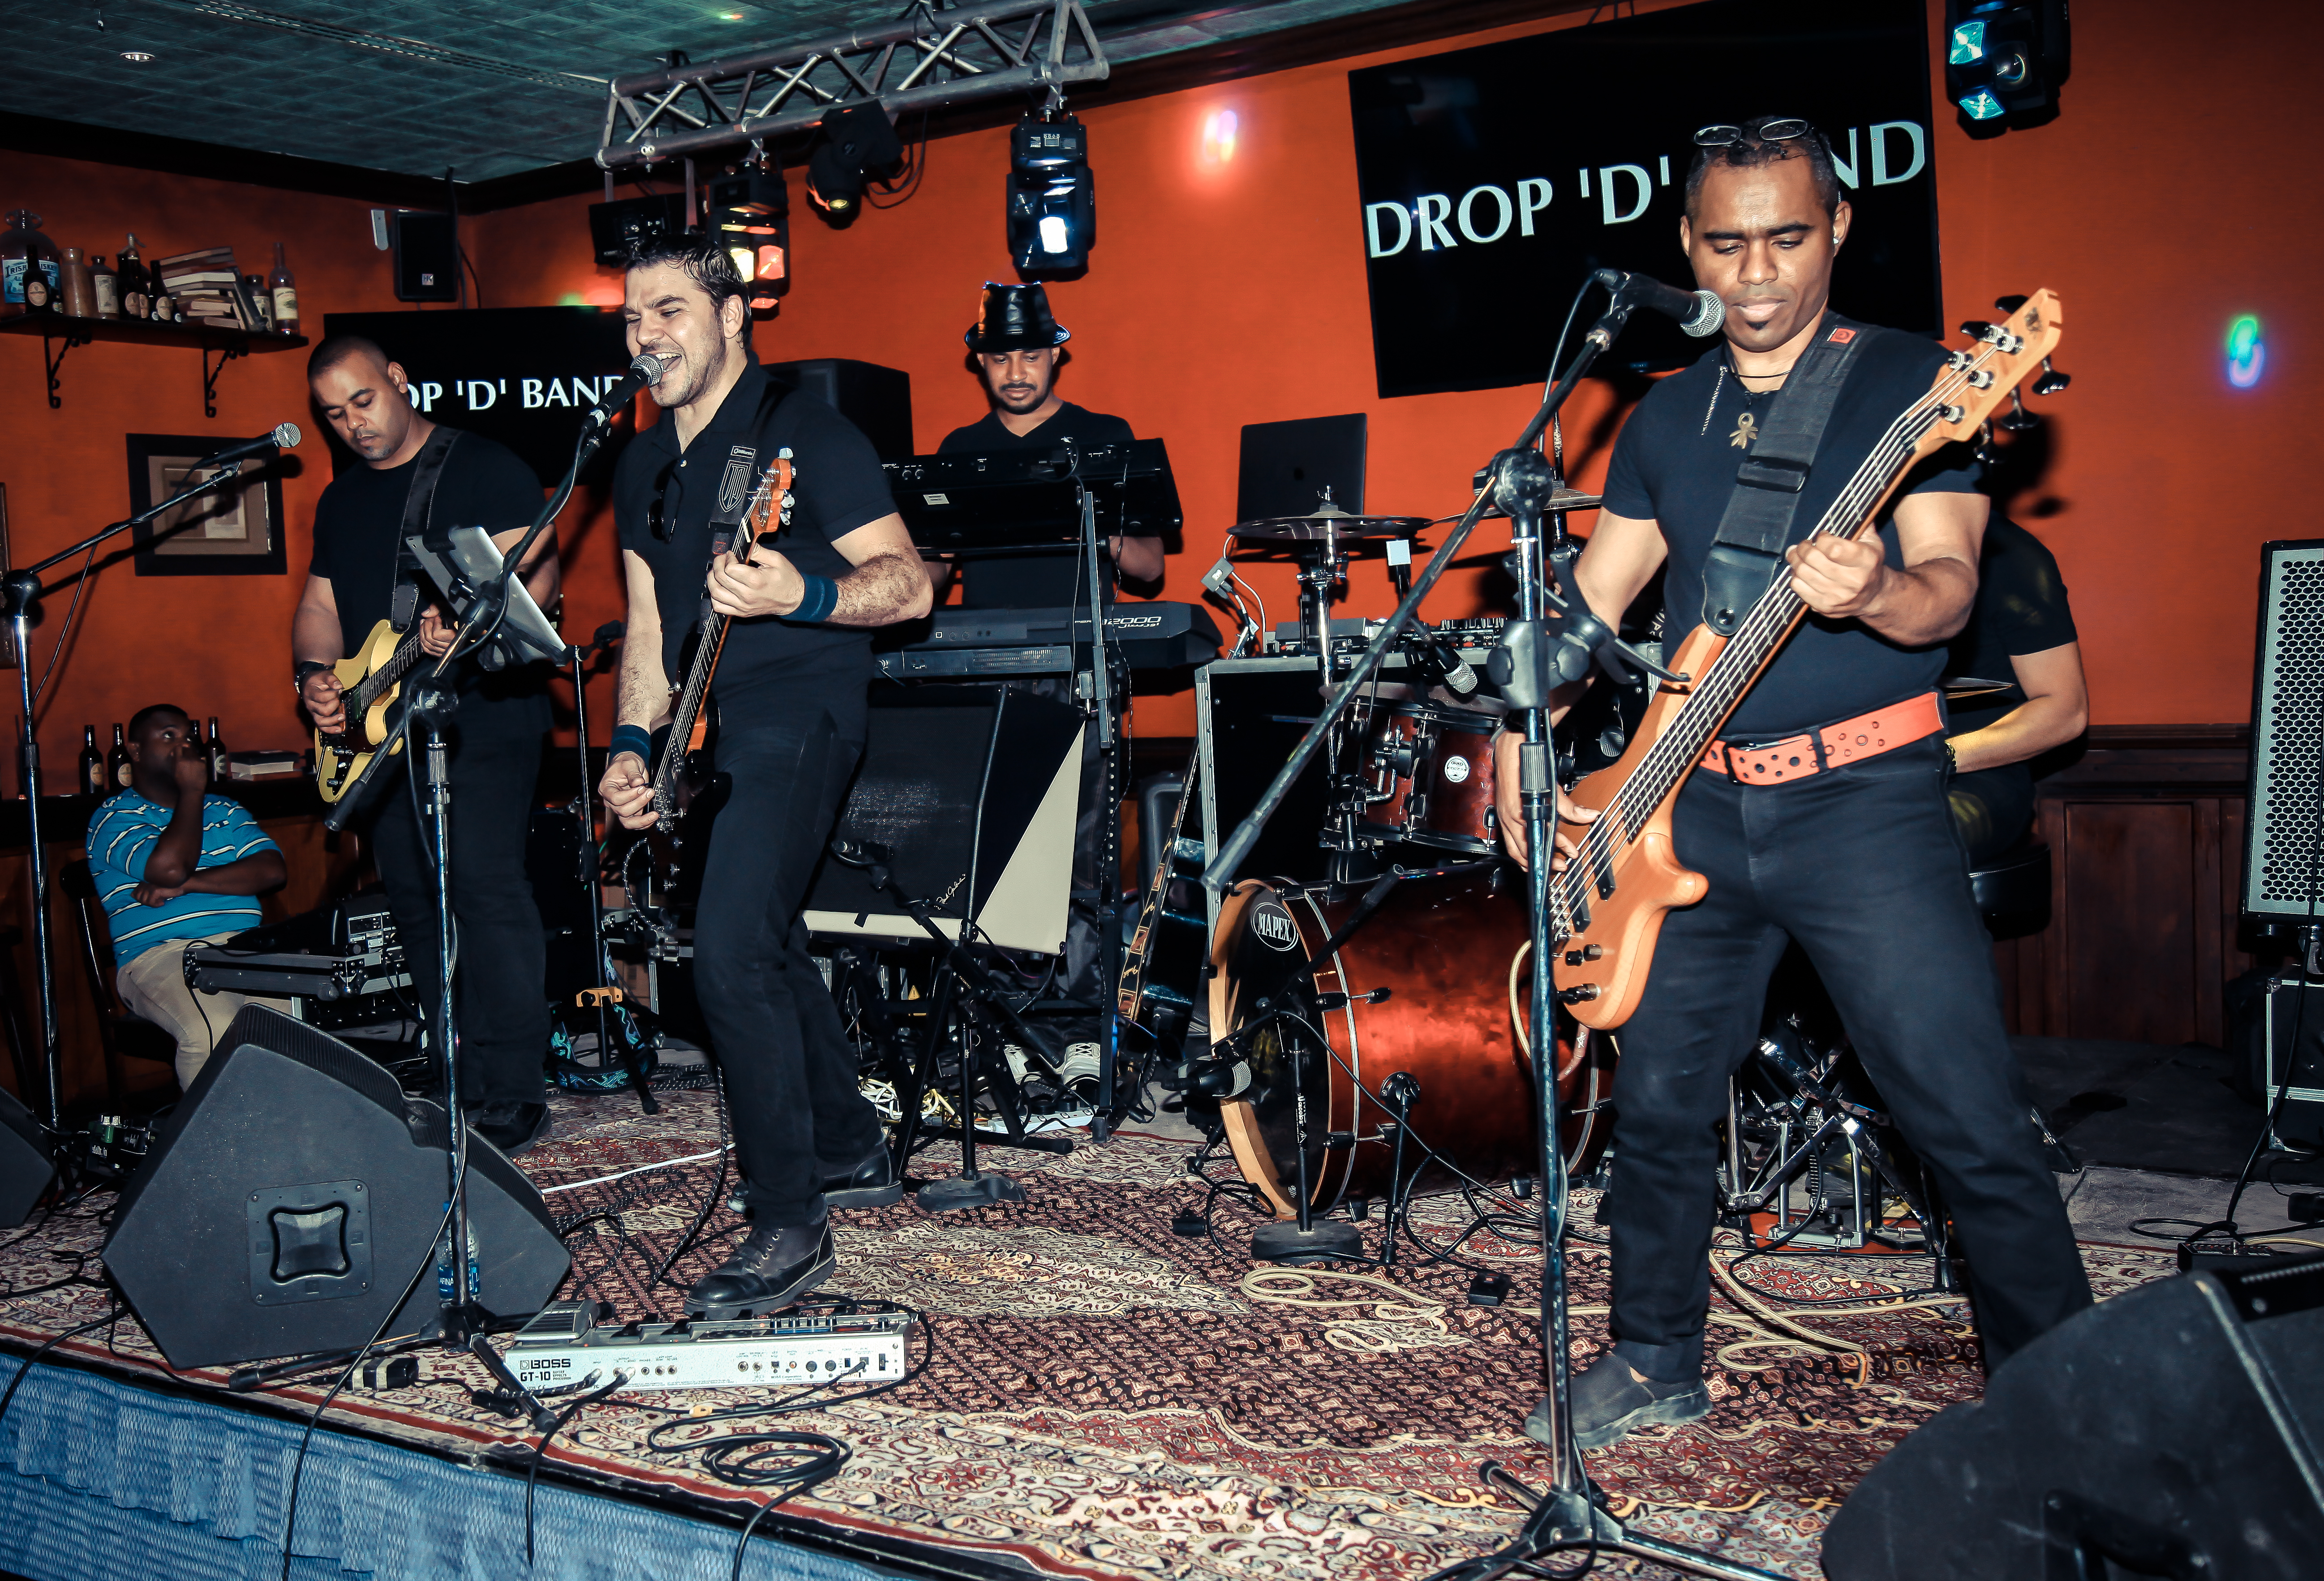 Meet Oman's favourite rock band